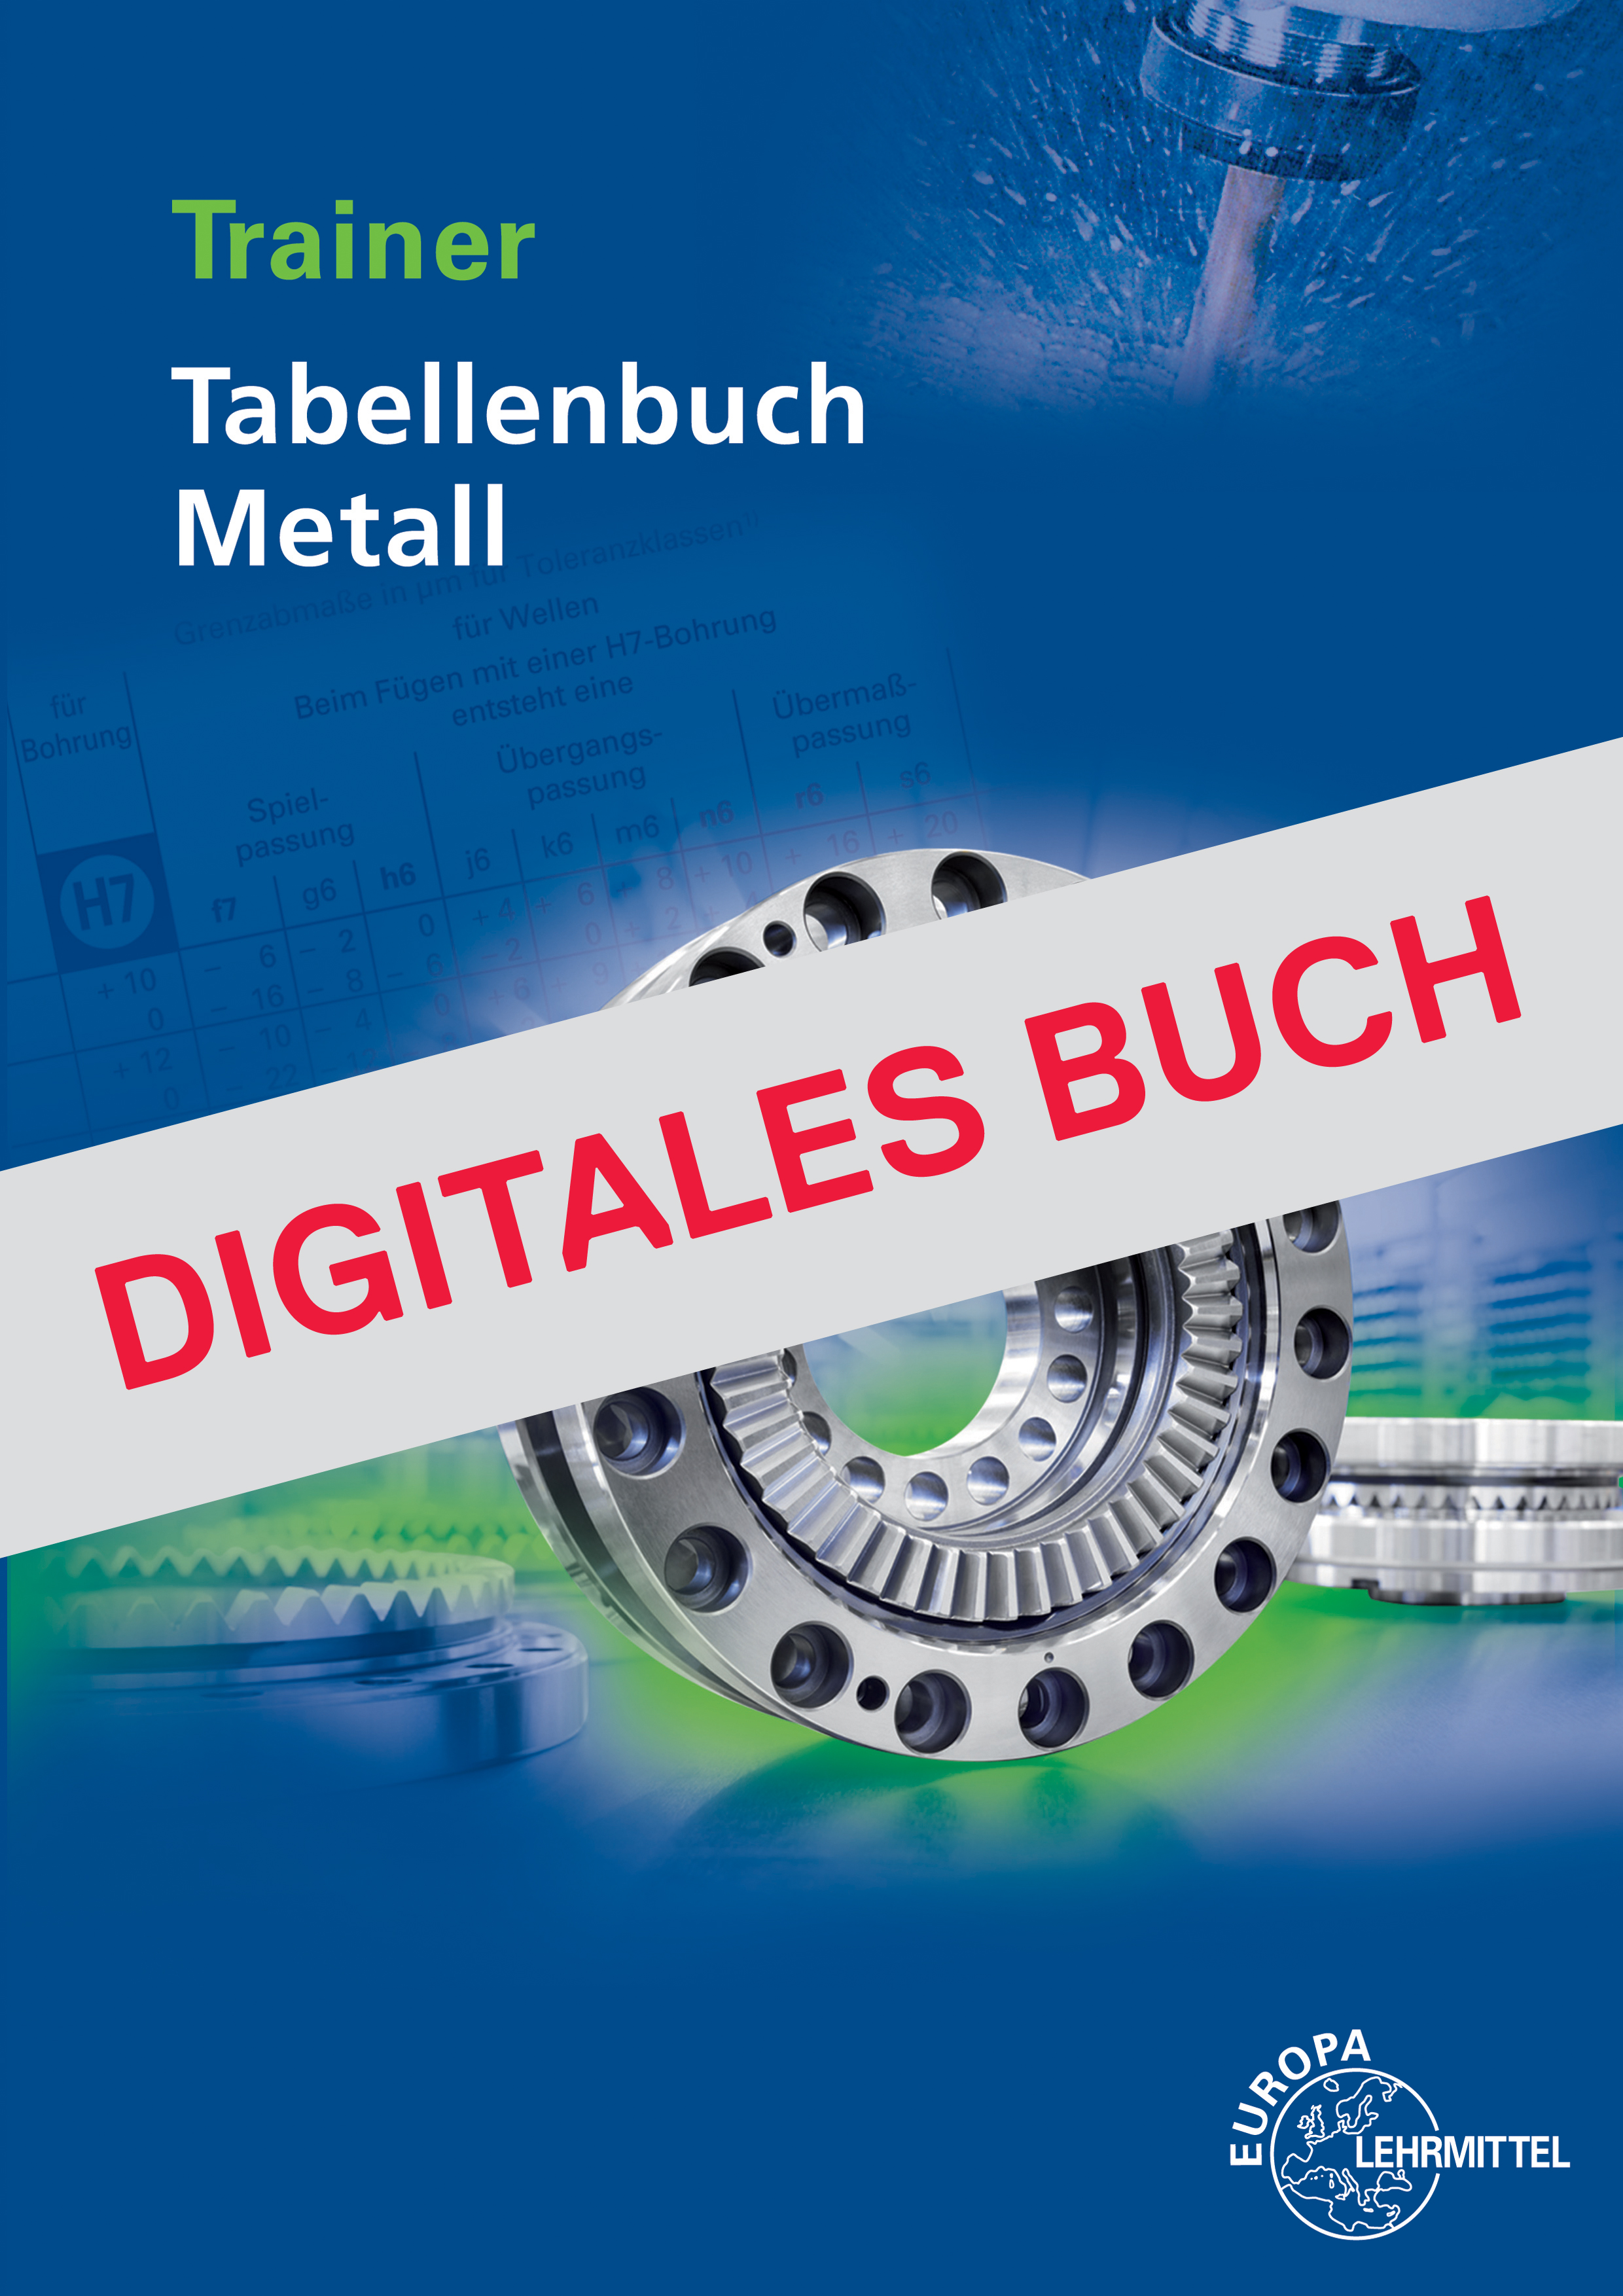 Trainer Tabellenbuch Metall - Digitales Buch